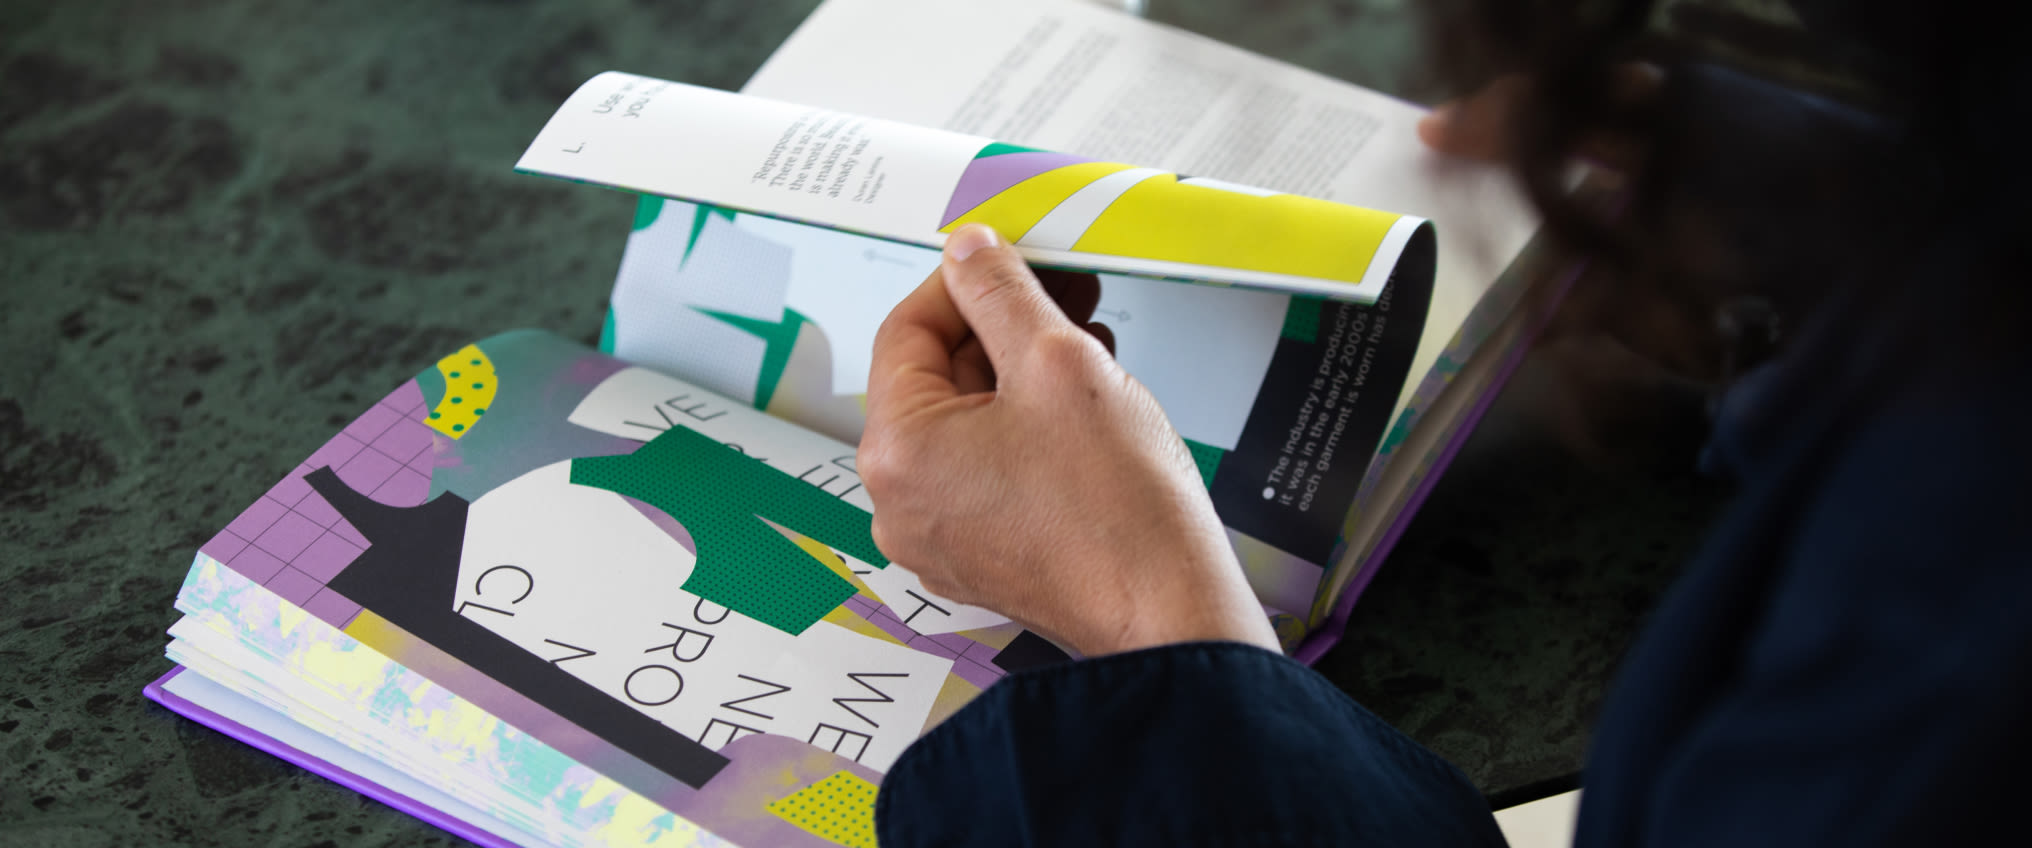 Person reading circular design for fashion book